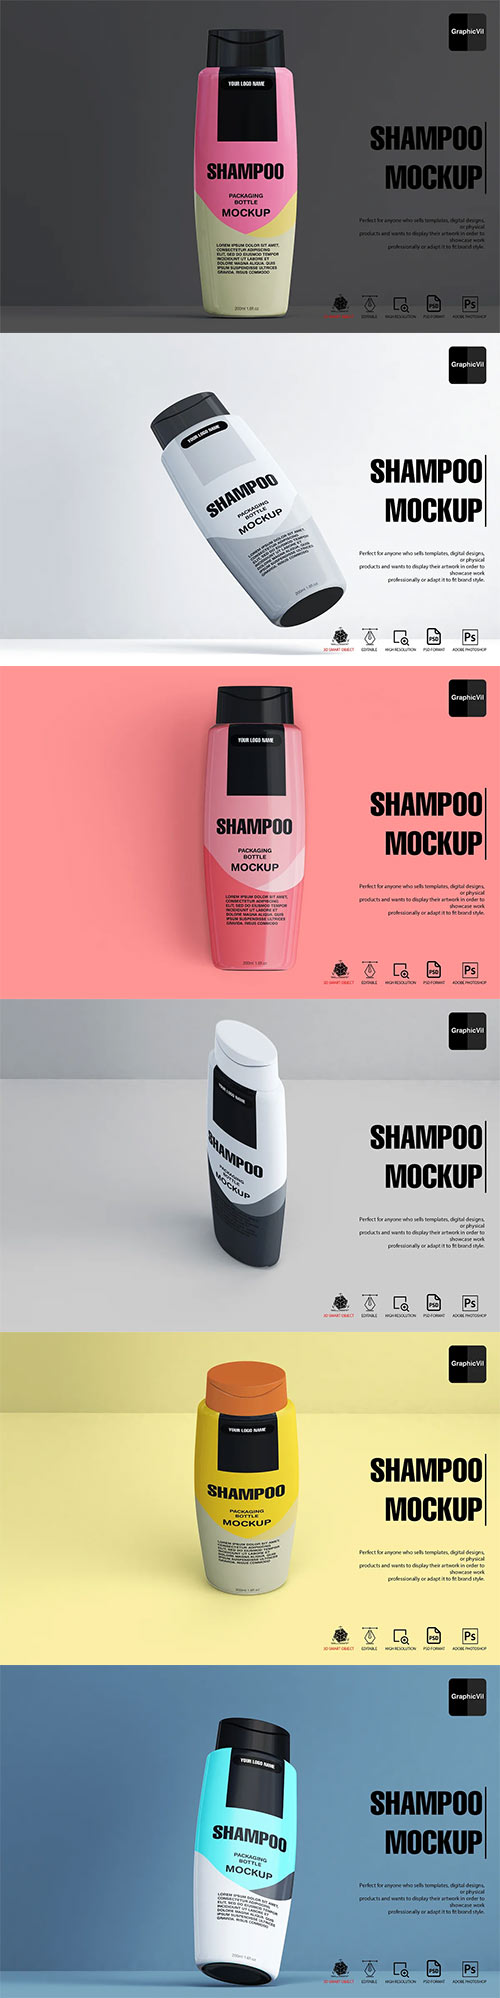 Shampoo Bottle Mockup 10889966